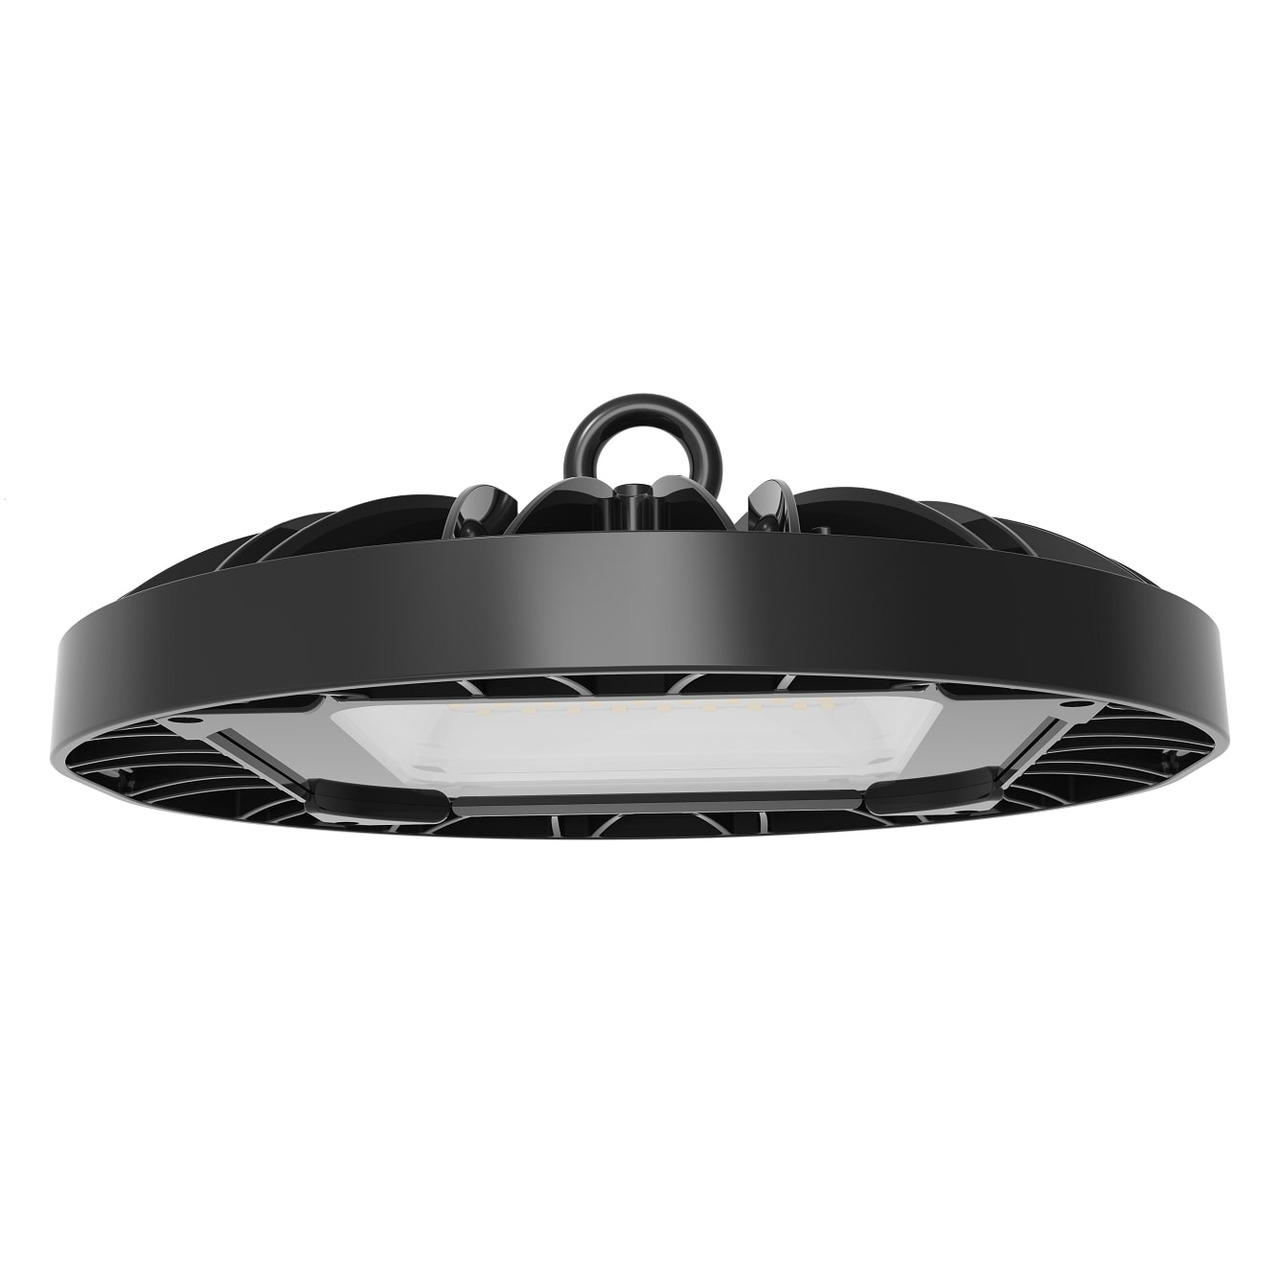 LUXULA 150-W-LED-Strahler UFO-HighBay 150- 14400 lm- 96 lm-W- 5000 K- neutralweiss- IP65 unter Beleuchtung